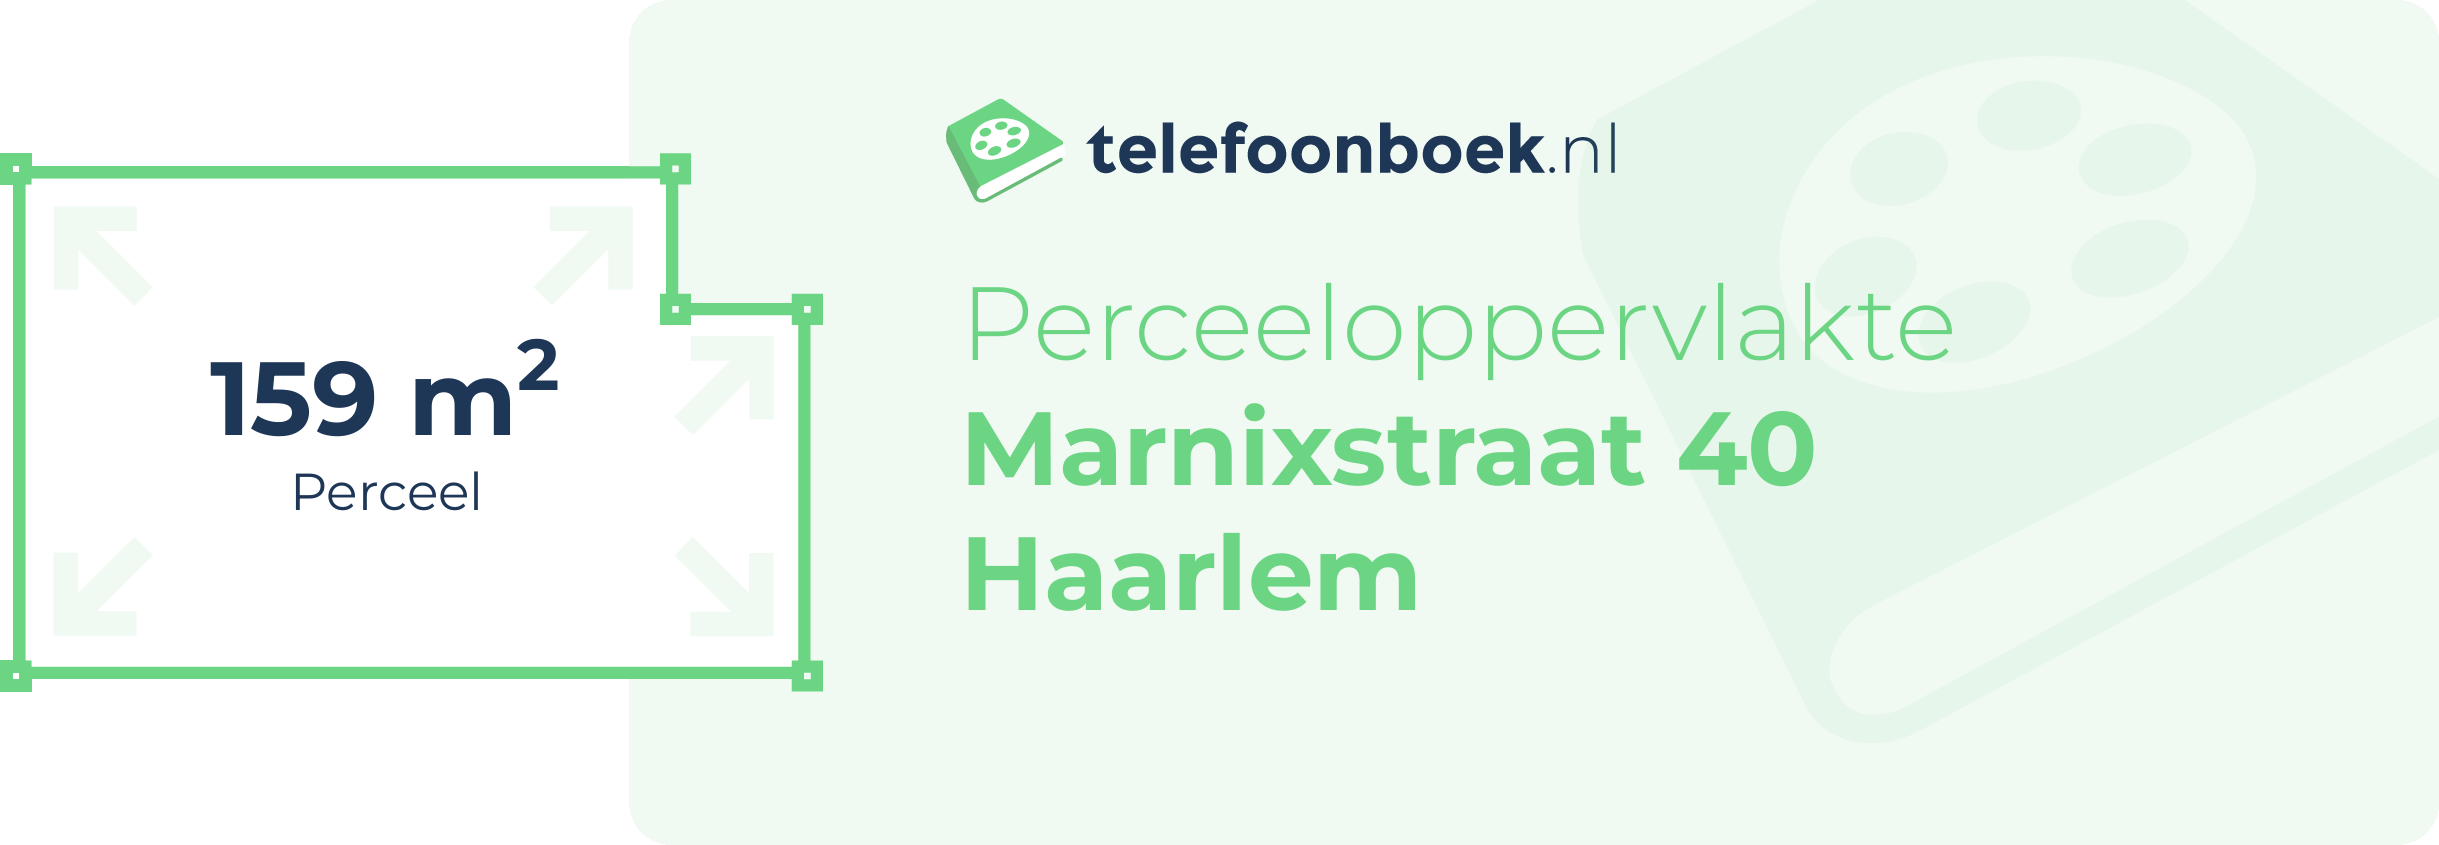 Perceeloppervlakte Marnixstraat 40 Haarlem